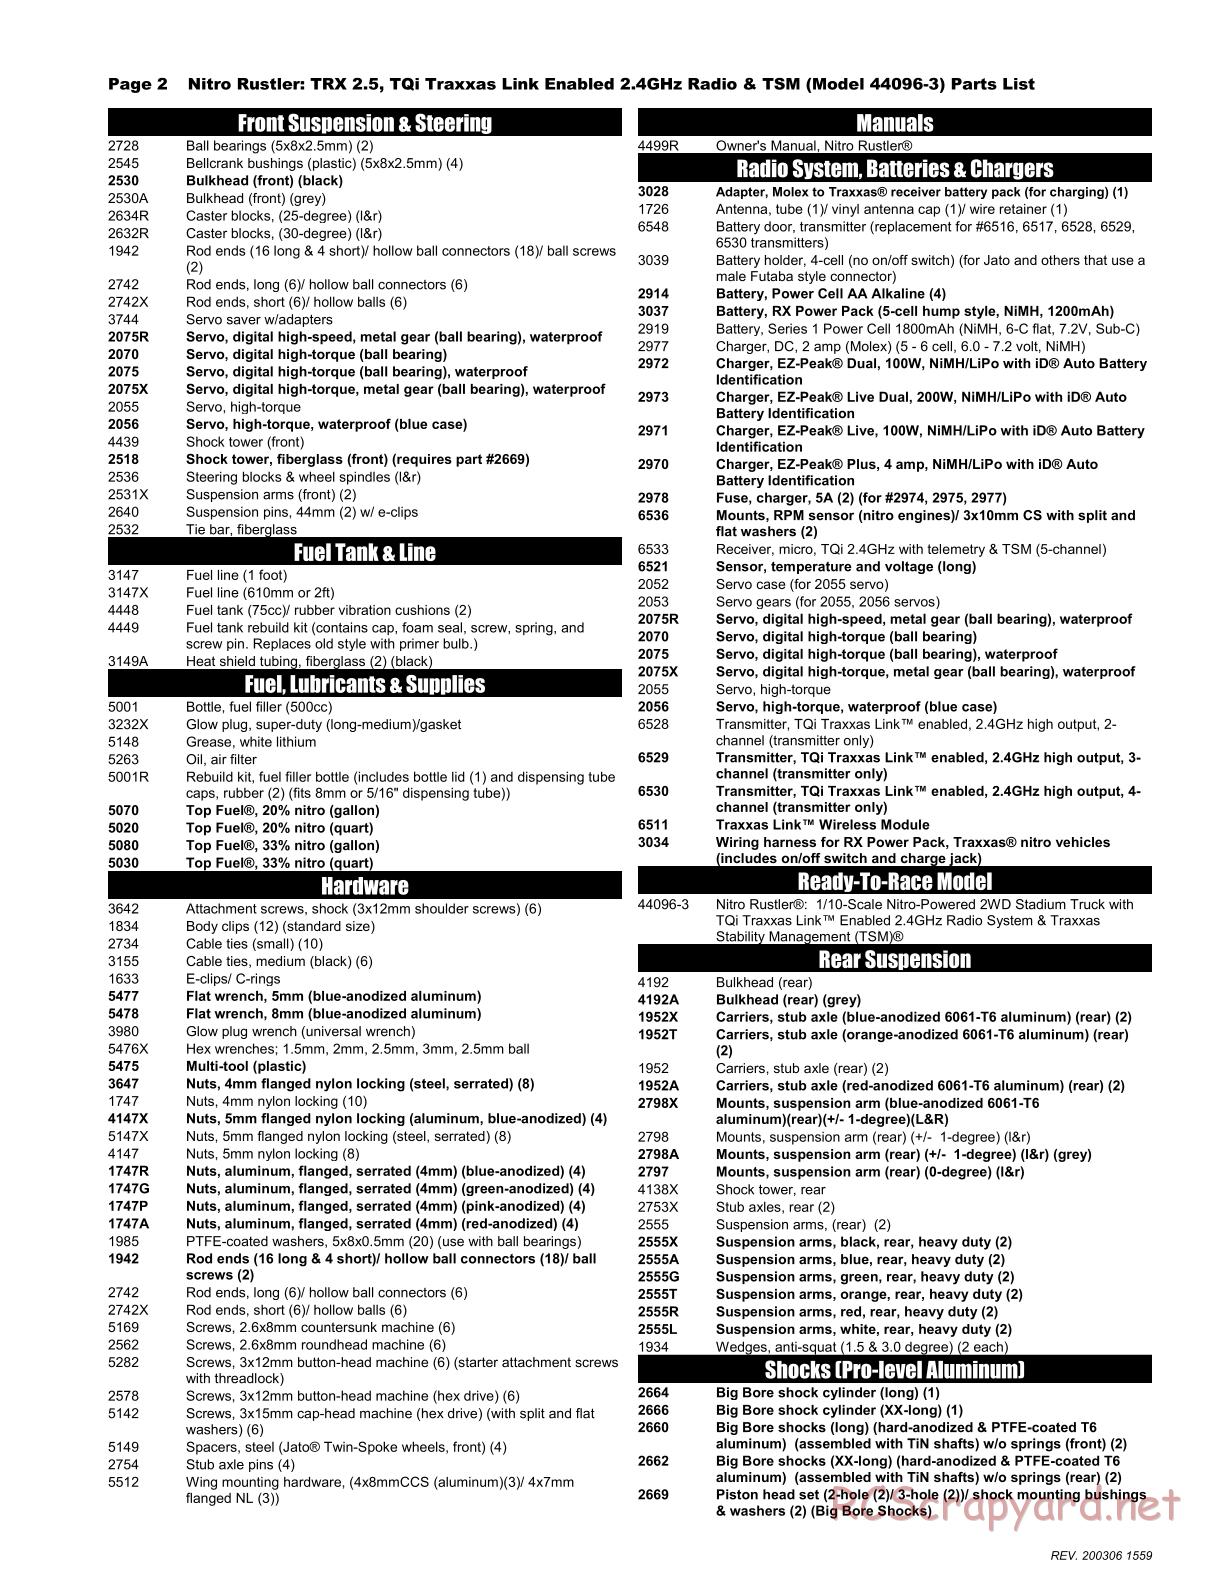 Traxxas - Nitro Rustler TSM (2016) - Parts List - Page 2